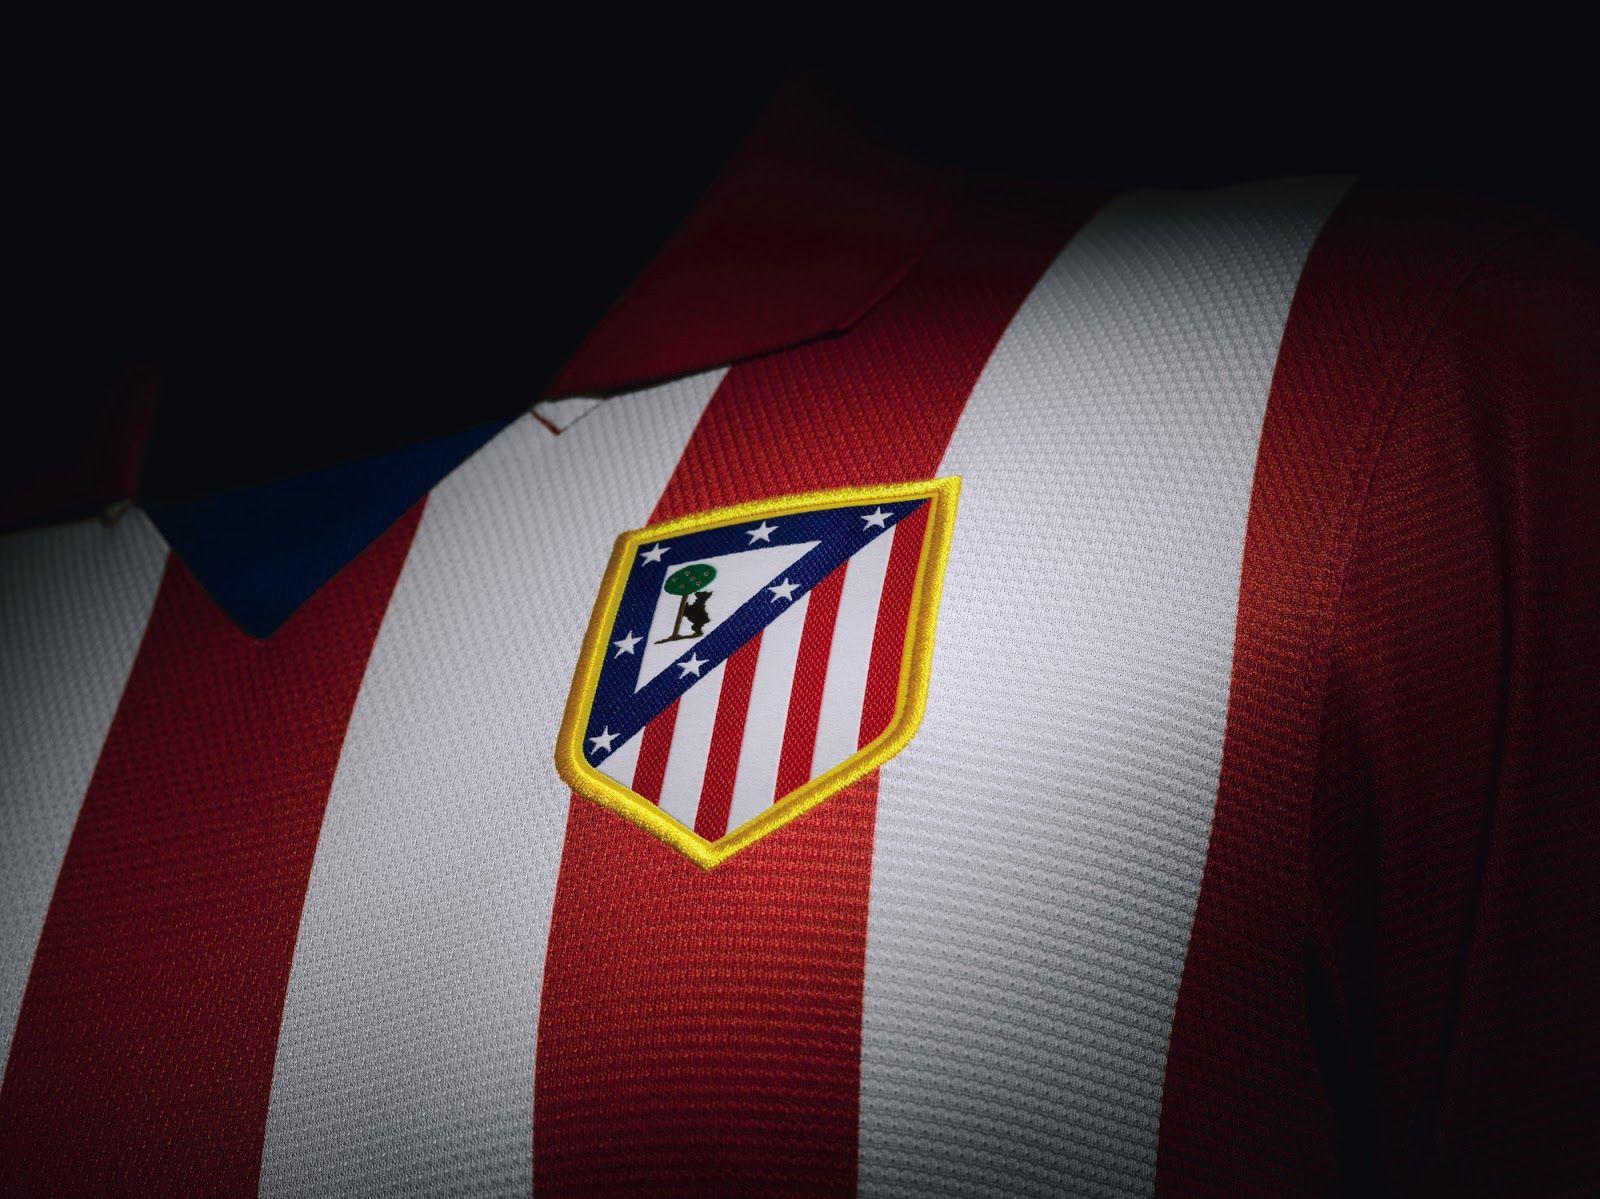 Atletico Madrid Professional Spanish Football Club Background Image